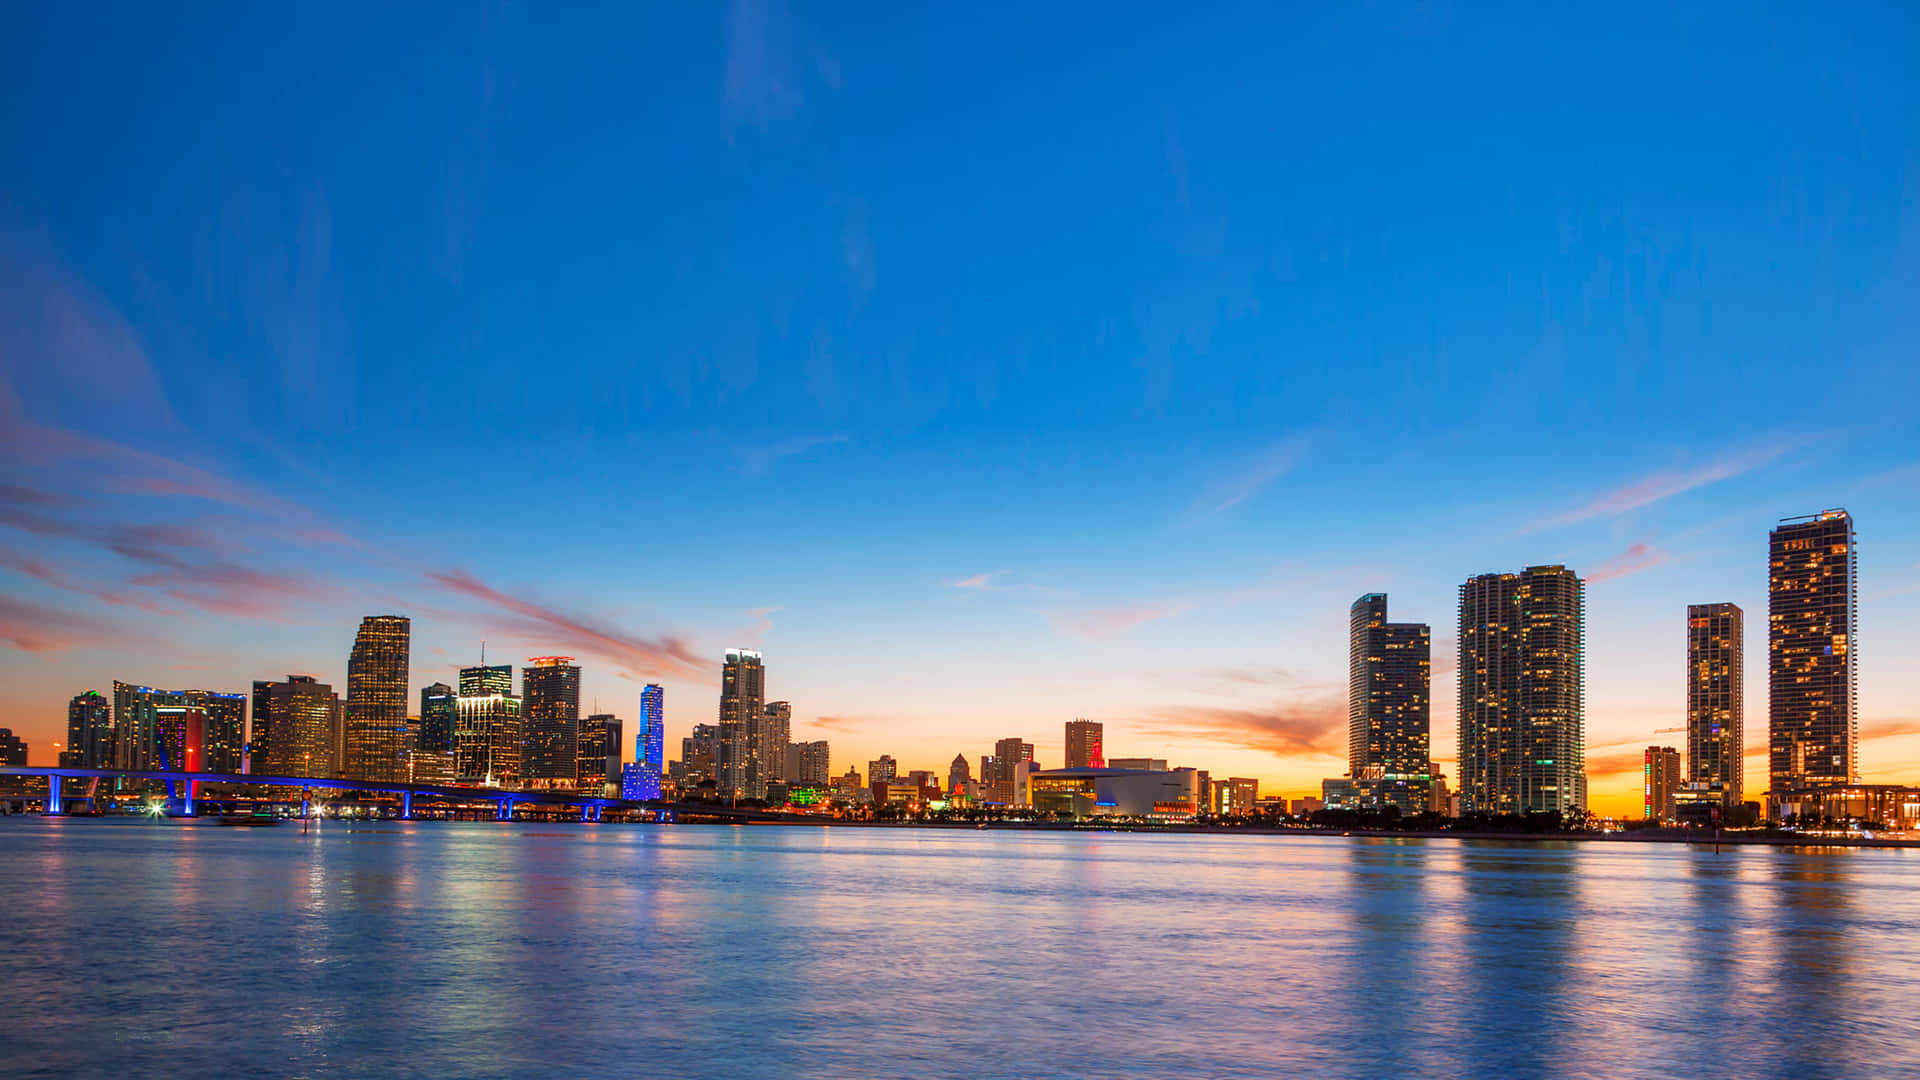 Explore the beautiful city of Miami